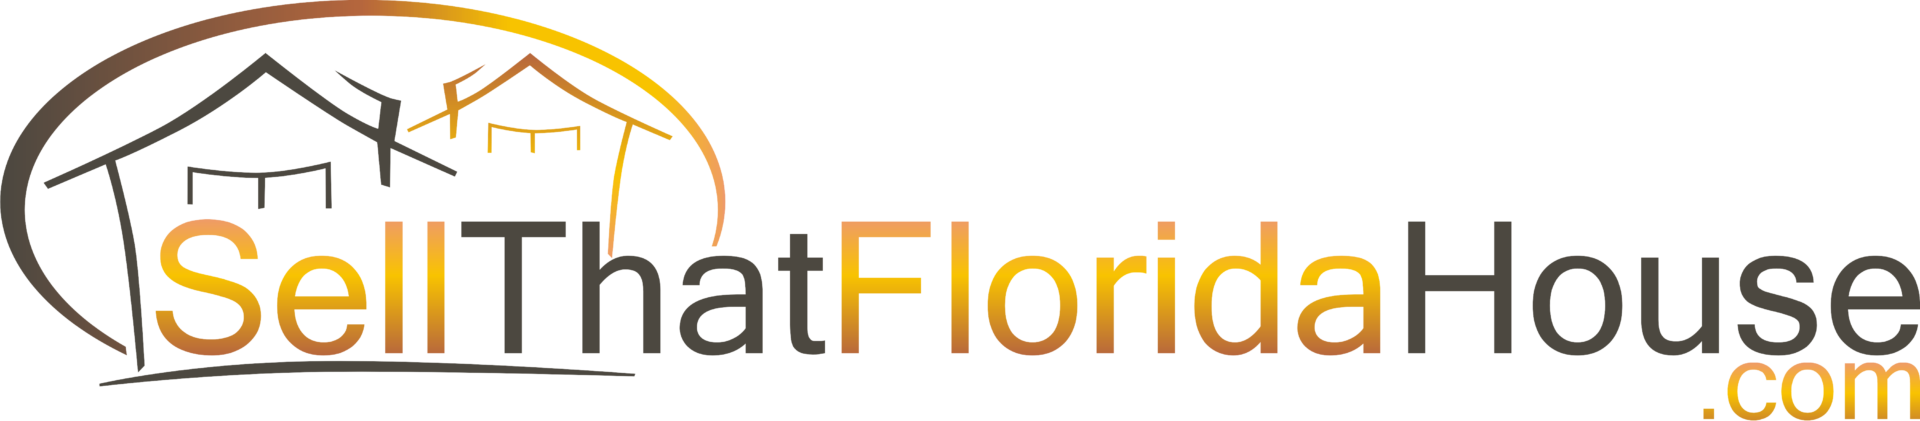 Sell That Florida House logo